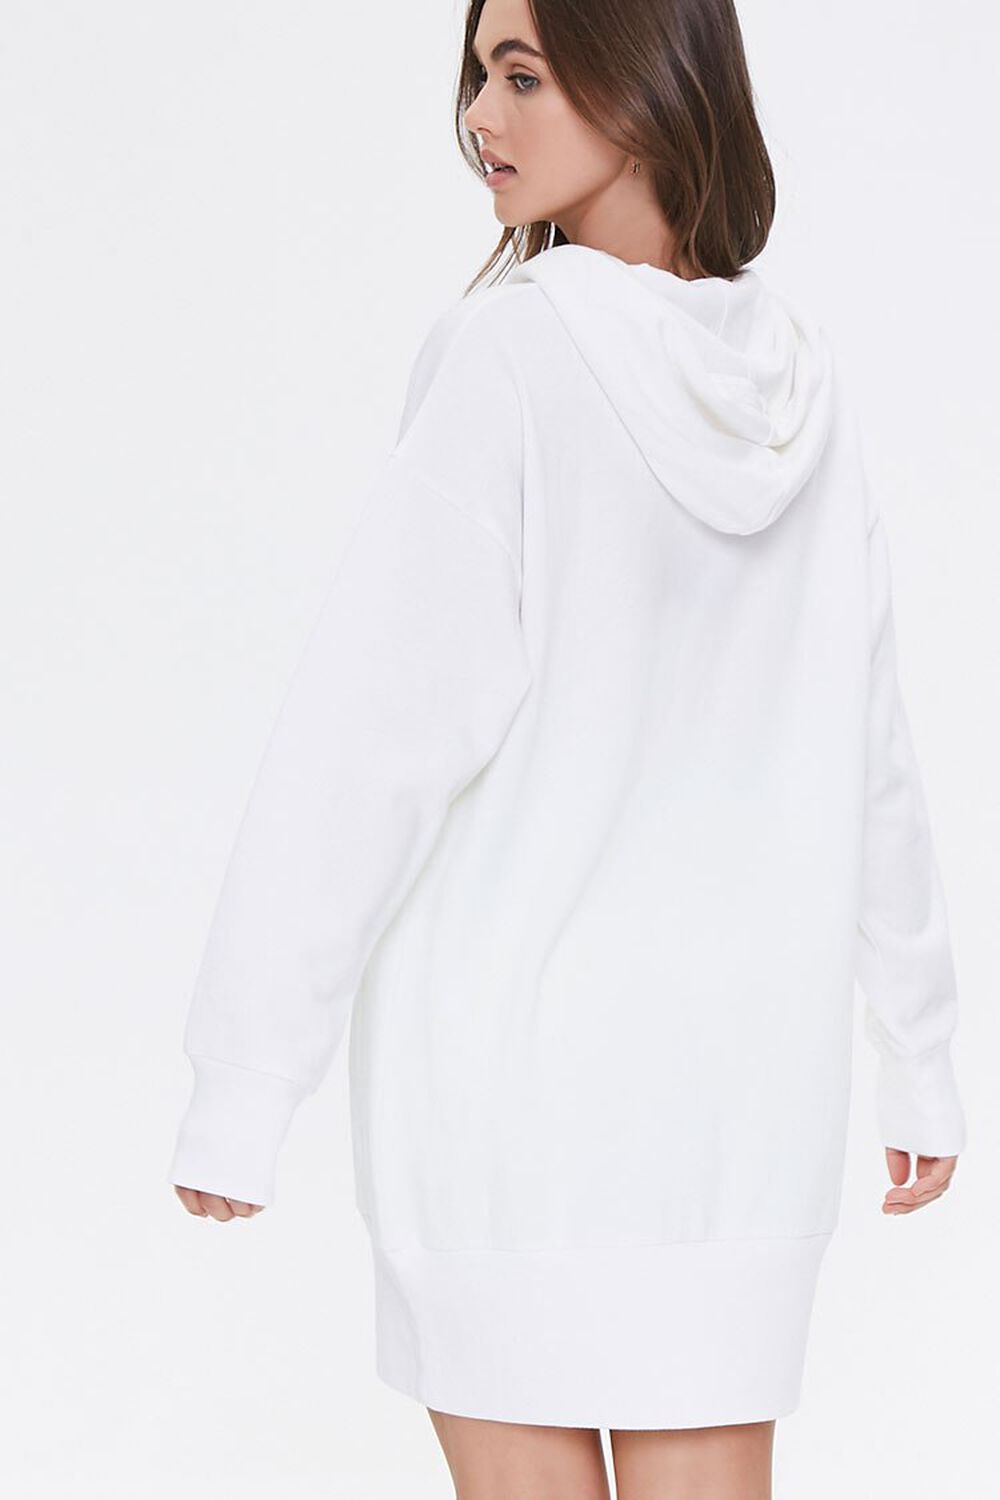 WHITE Mini Hoodie Dress, image 3